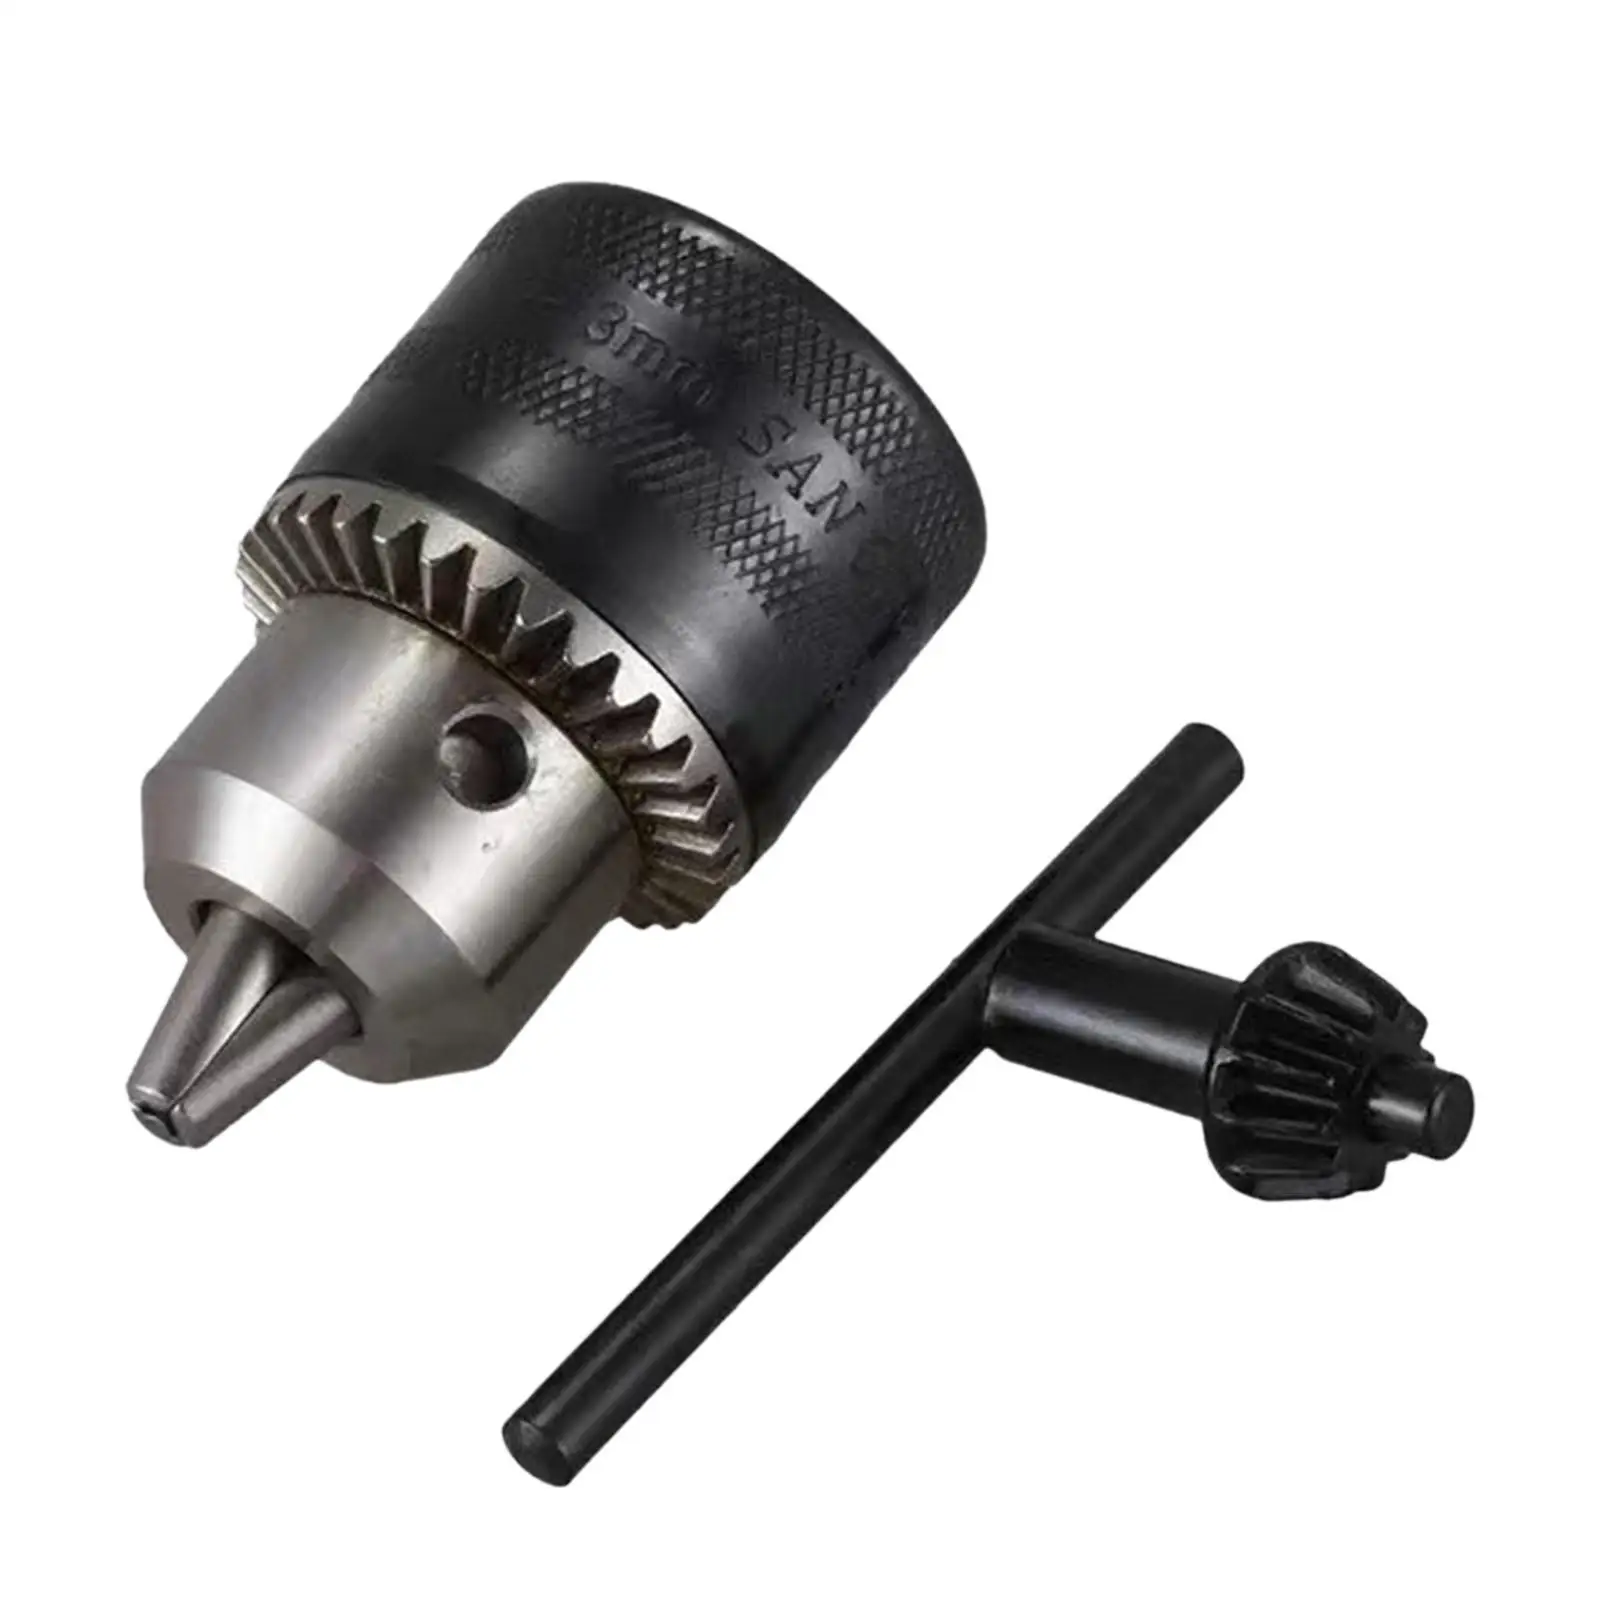 1.5-13mm Capacity Key Drill Chuck Socket Adapter Drill Press Chuck Key for Electric Drill Clamping 1/4